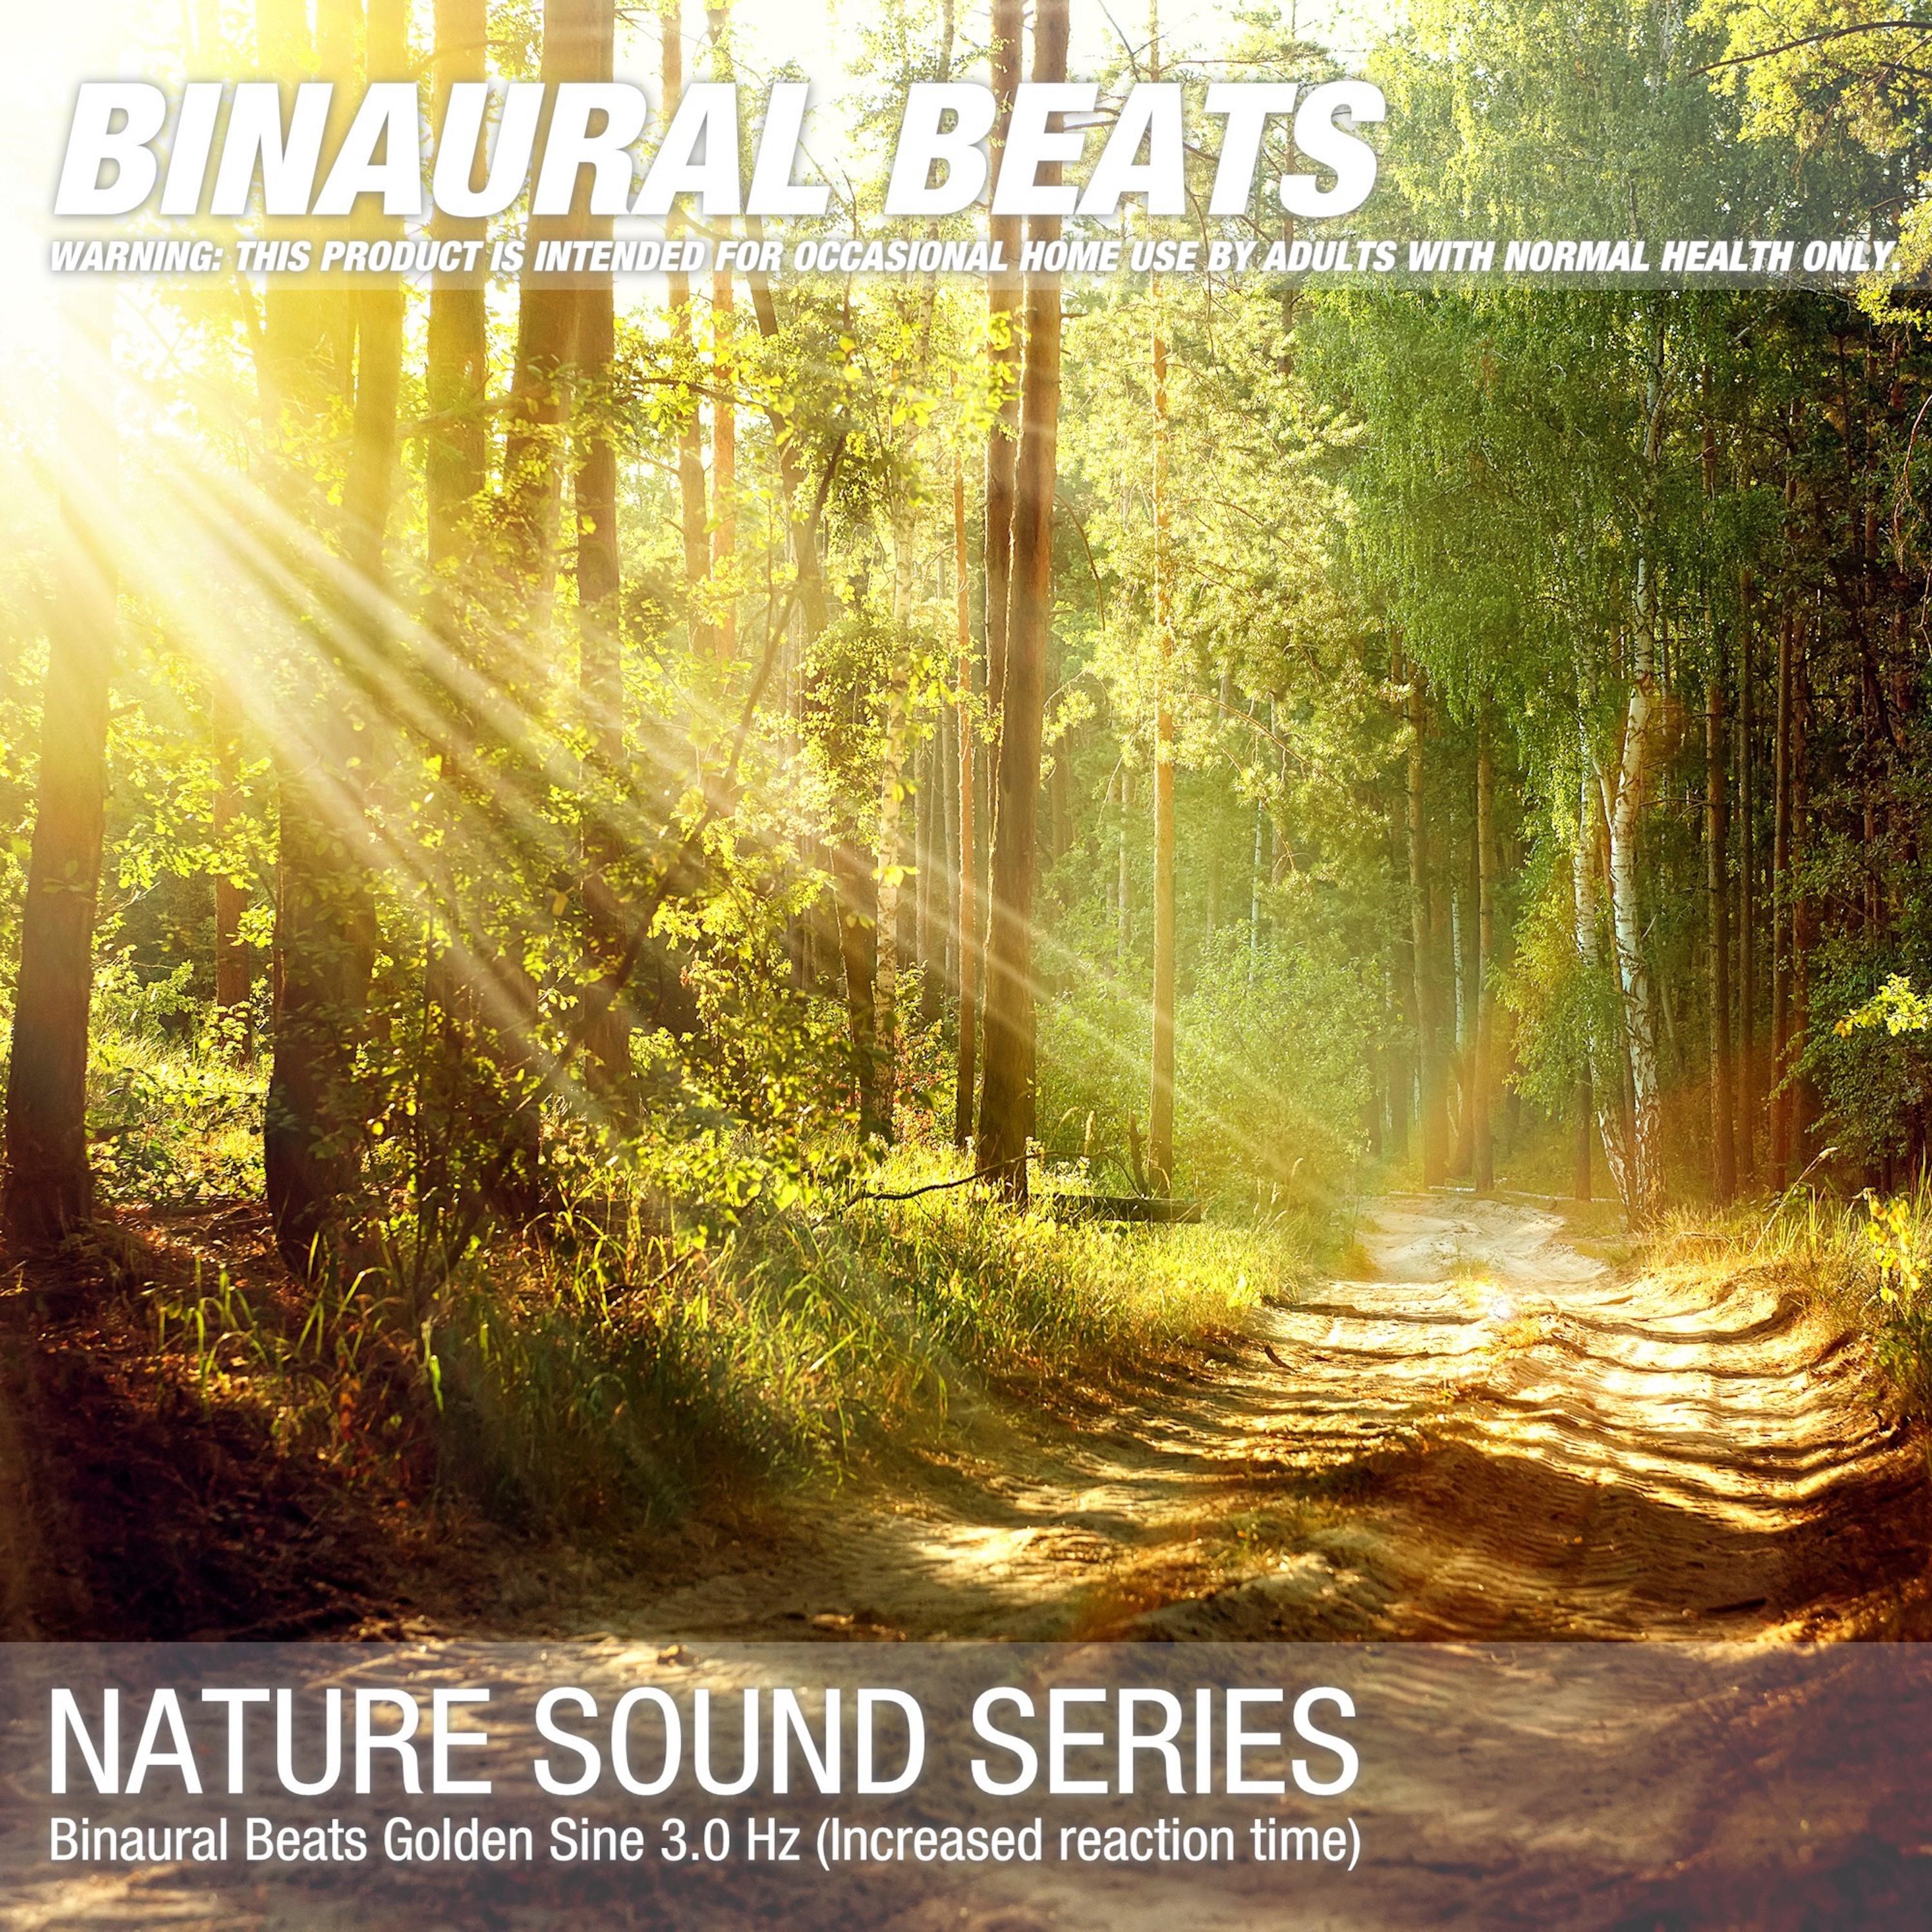 Binaural Beats Golden Sine 3.0 Hz (Increased reaction time) 05